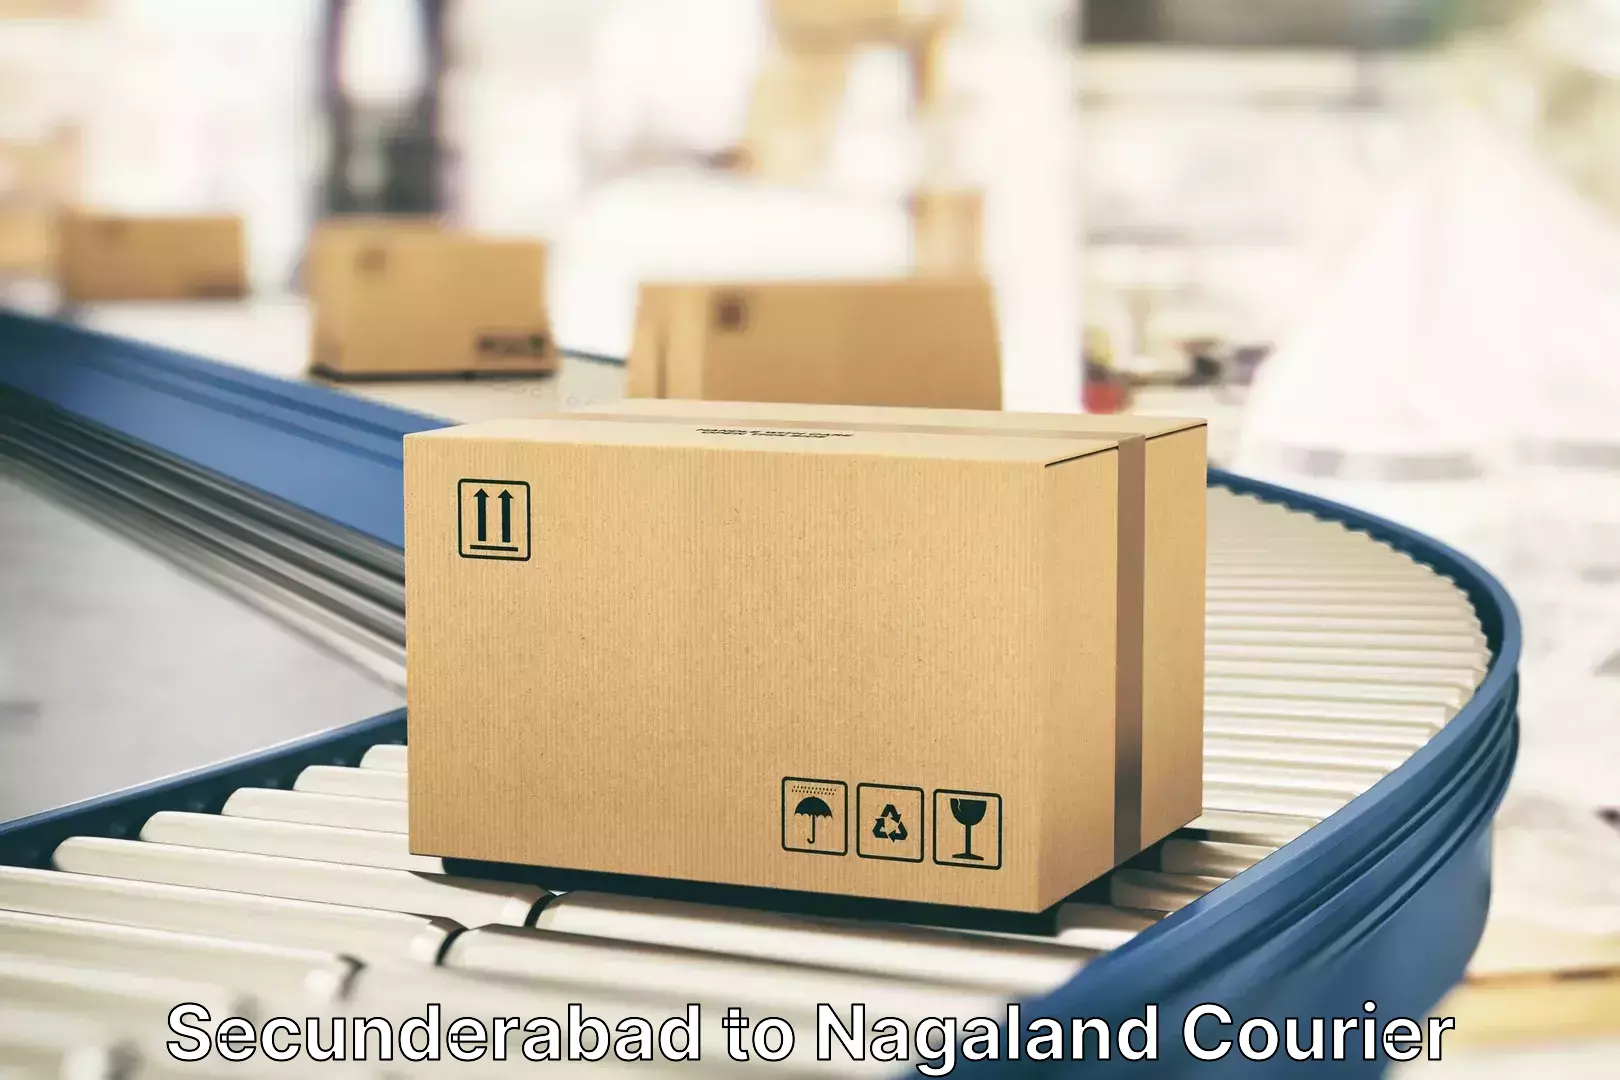 Luggage shipment specialists Secunderabad to Nagaland